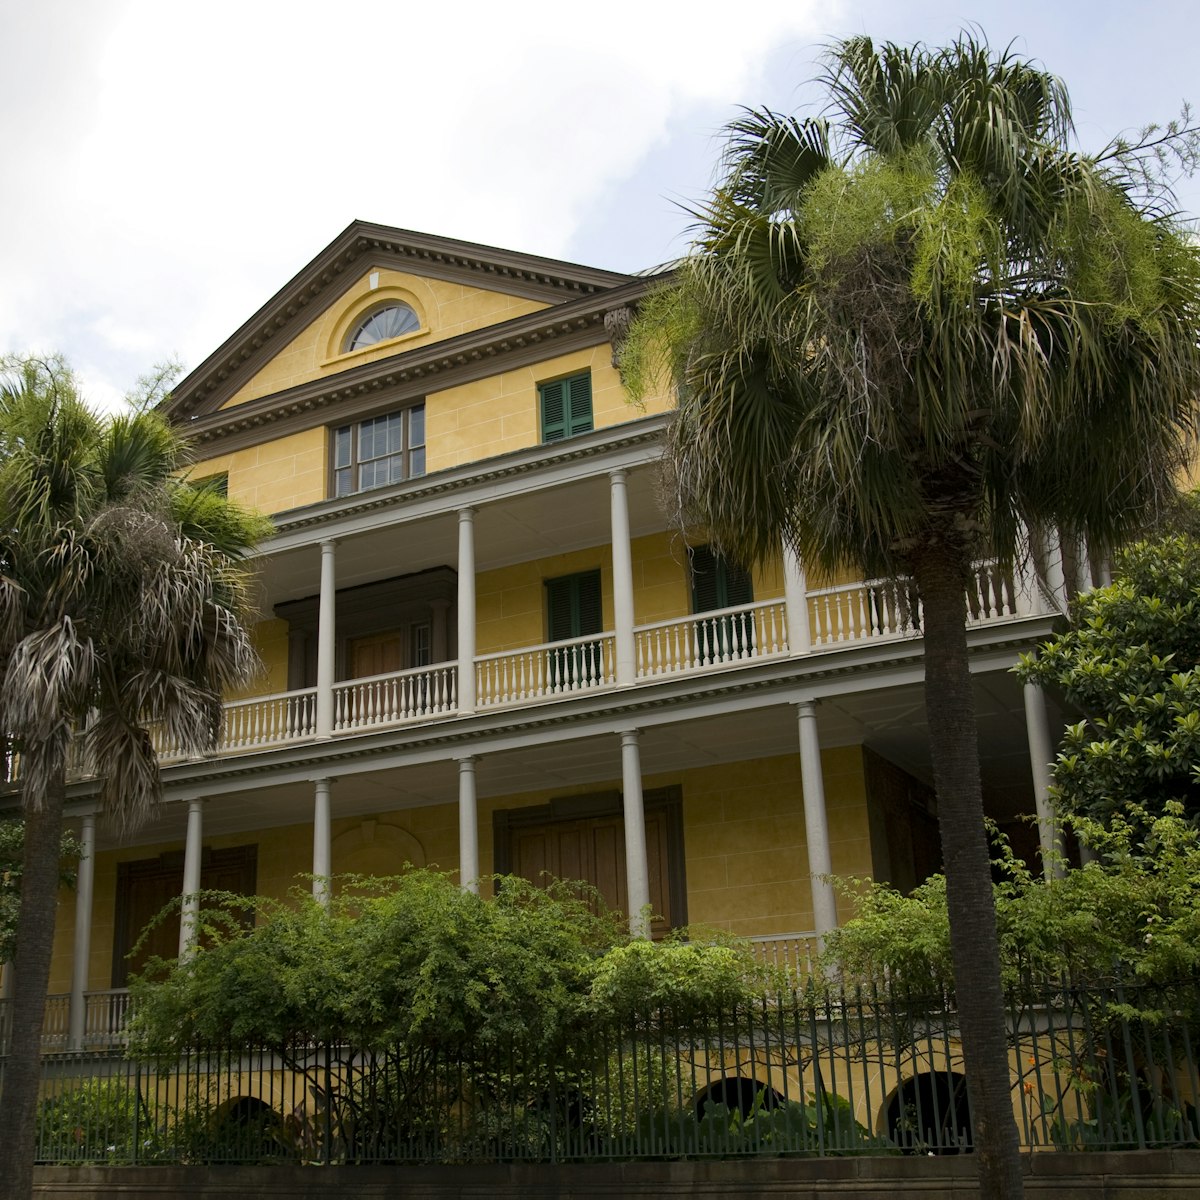 Historic Aiken-Rhett House in Charleston, South Carolina.